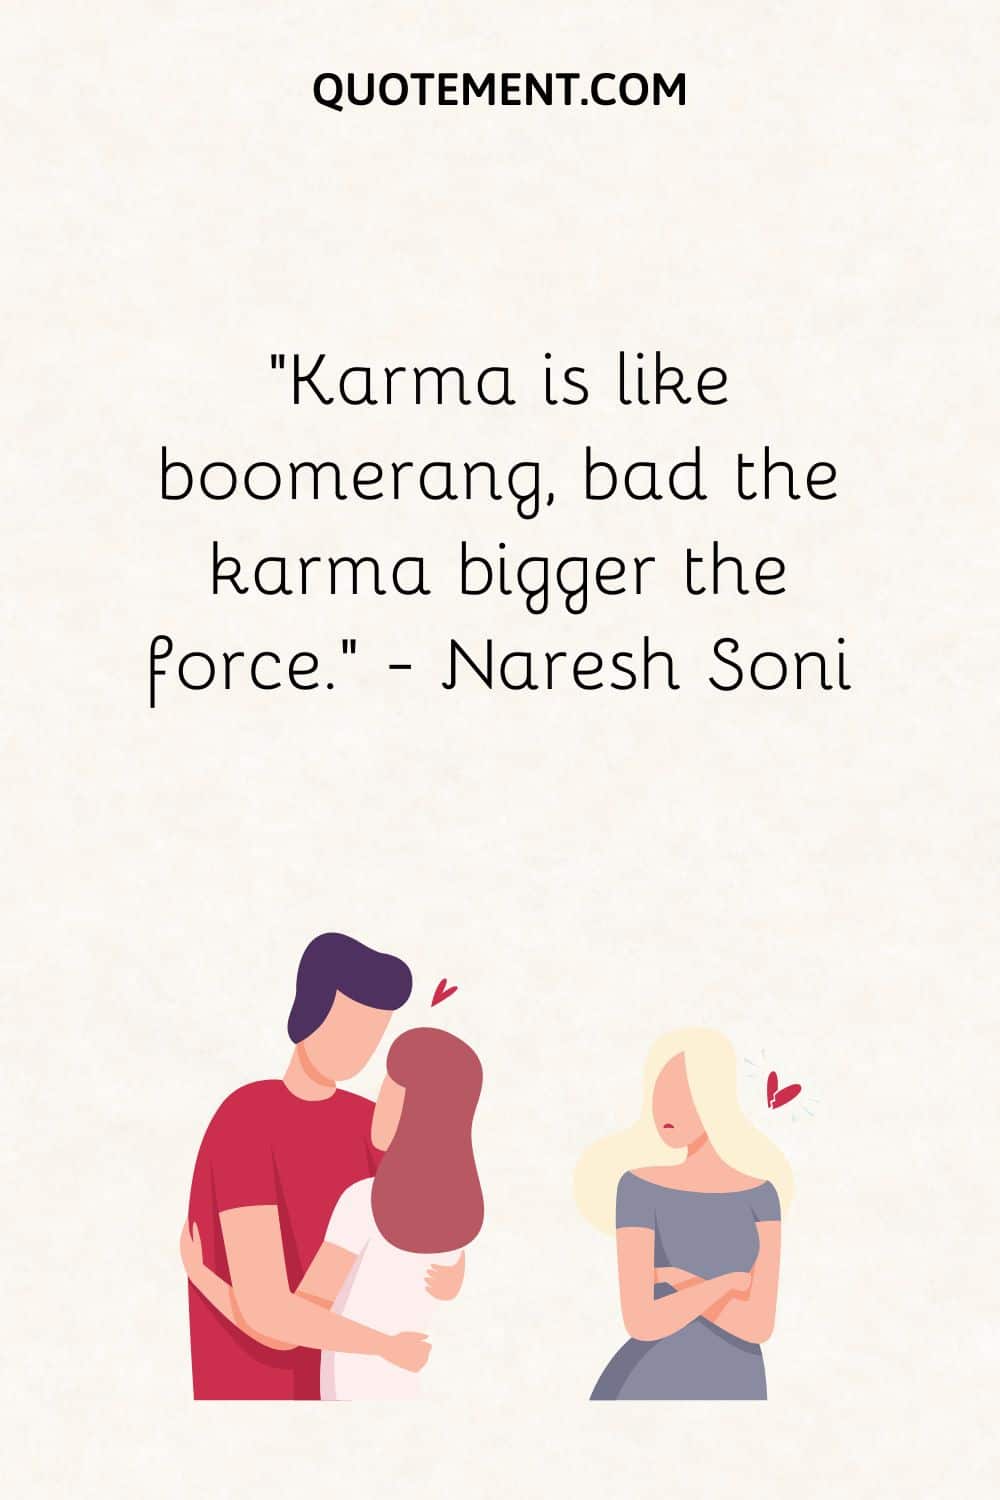 Karma is like boomerang, bad the karma bigger the force